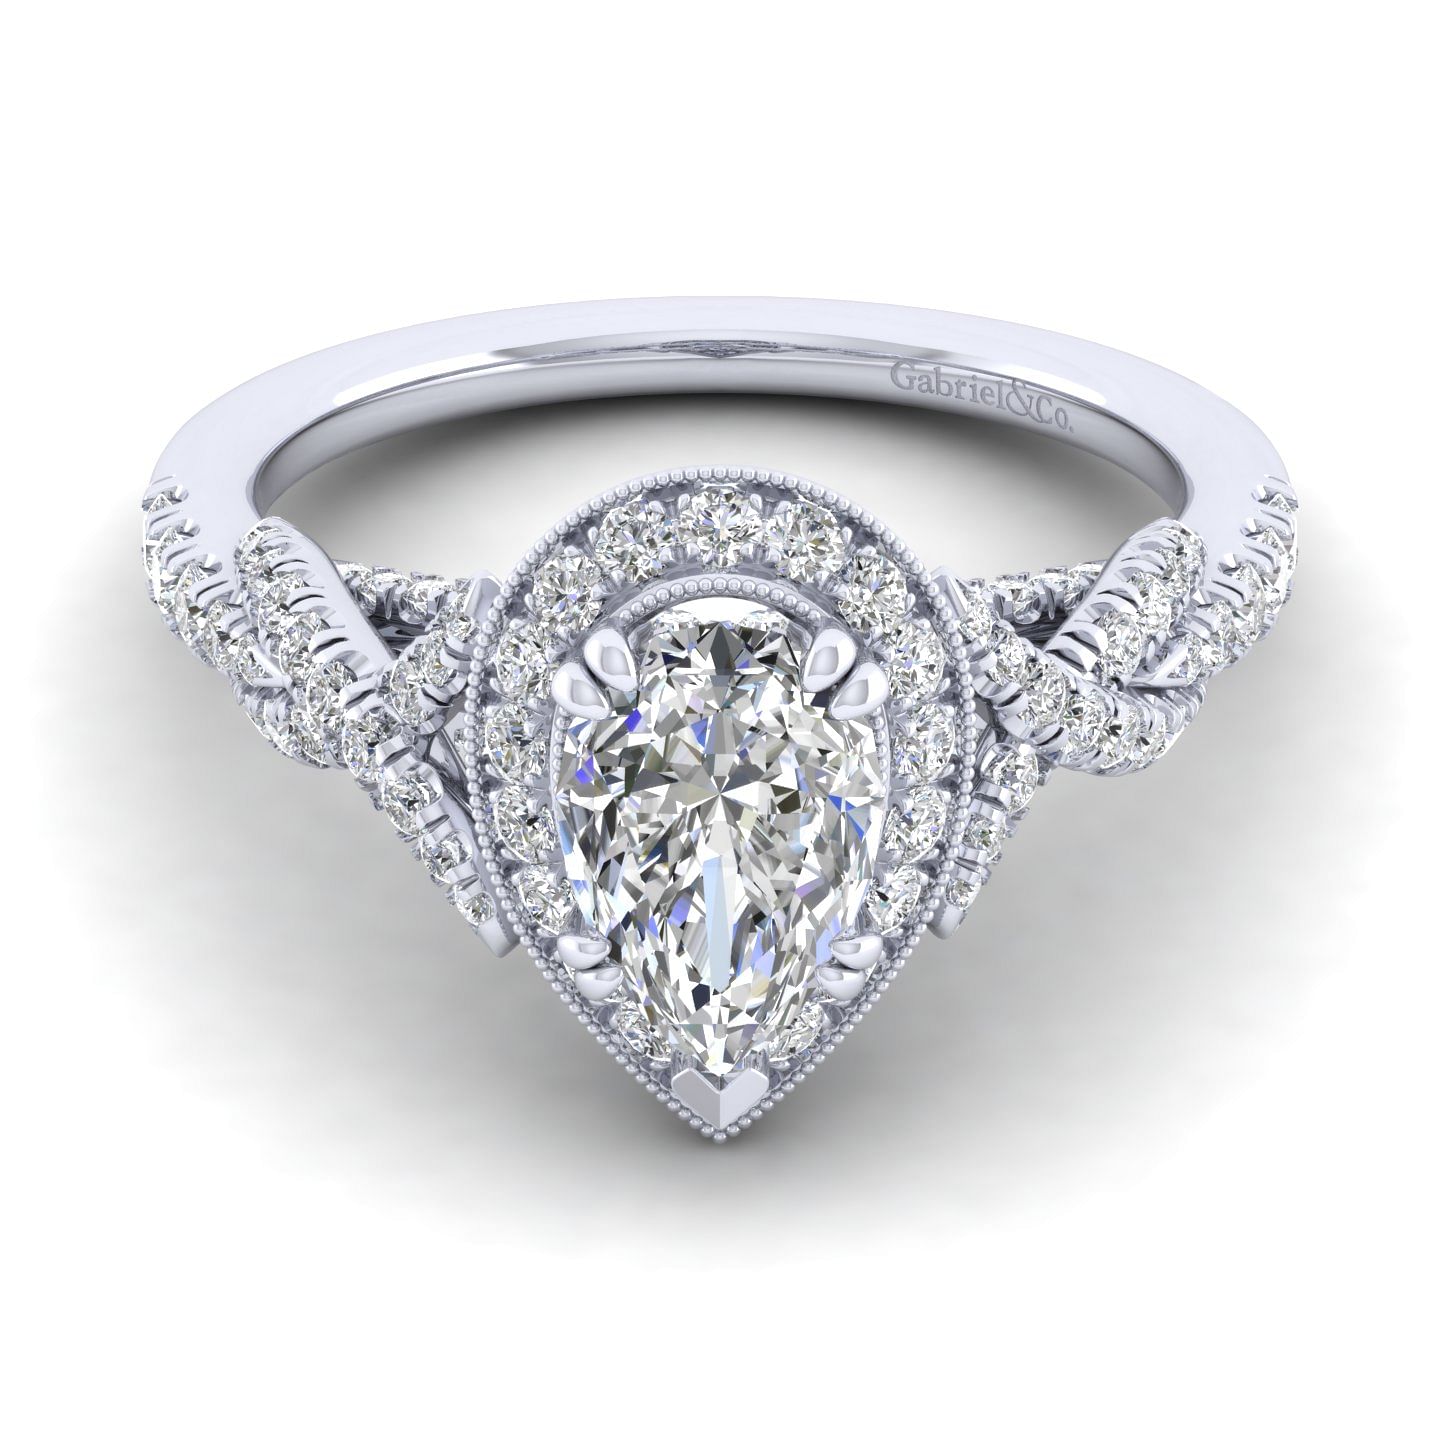 Wisteria - 14K White Gold Pear Shape Halo Diamond Engagement Ring